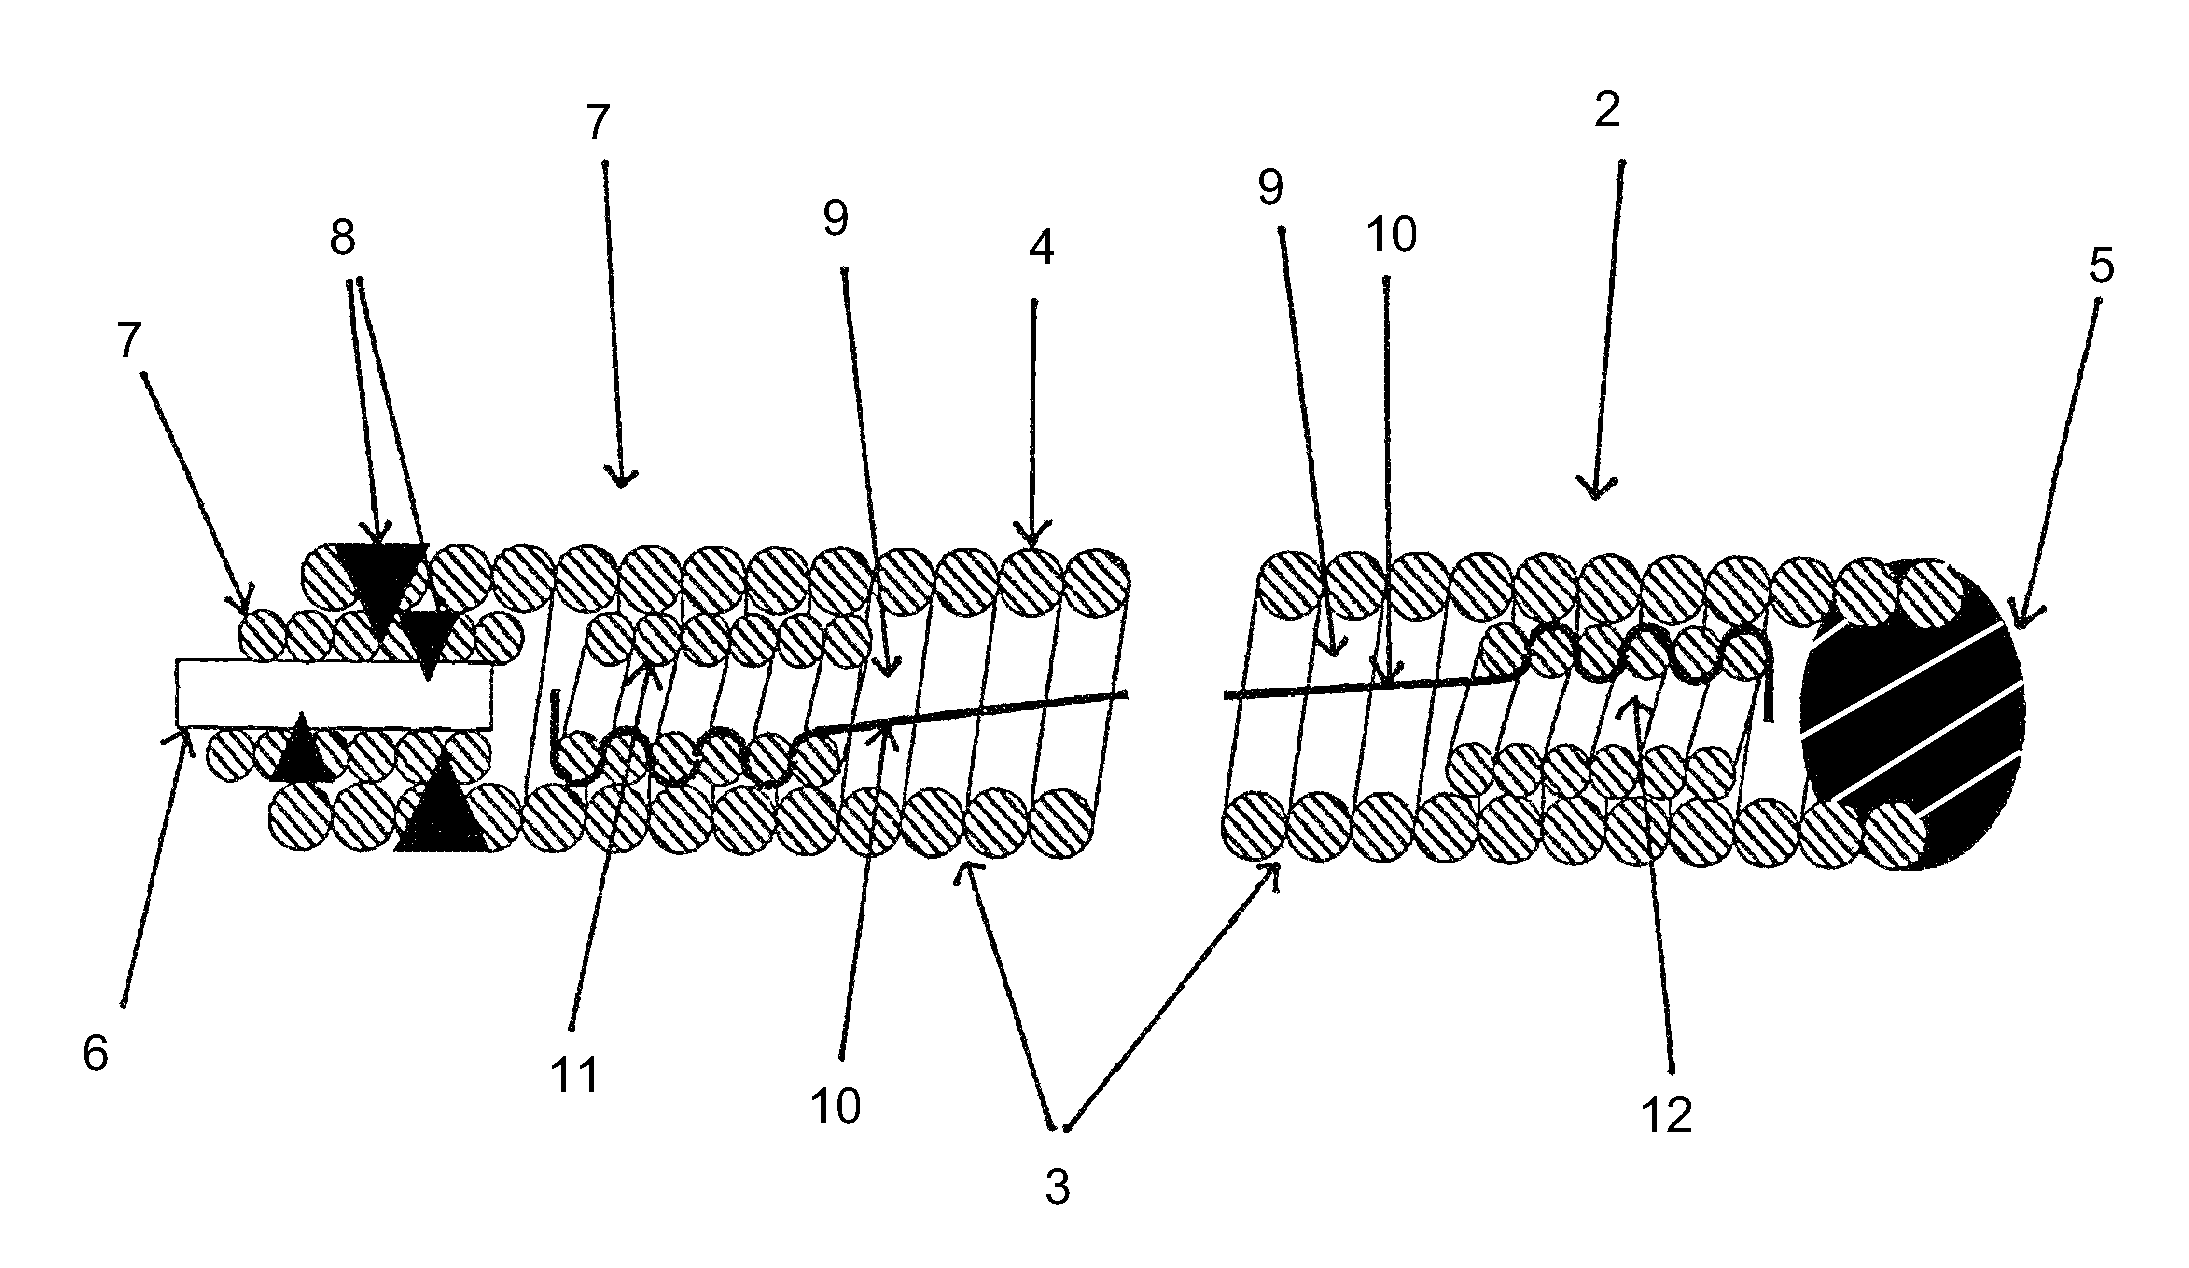 Micro-spiral implantation device